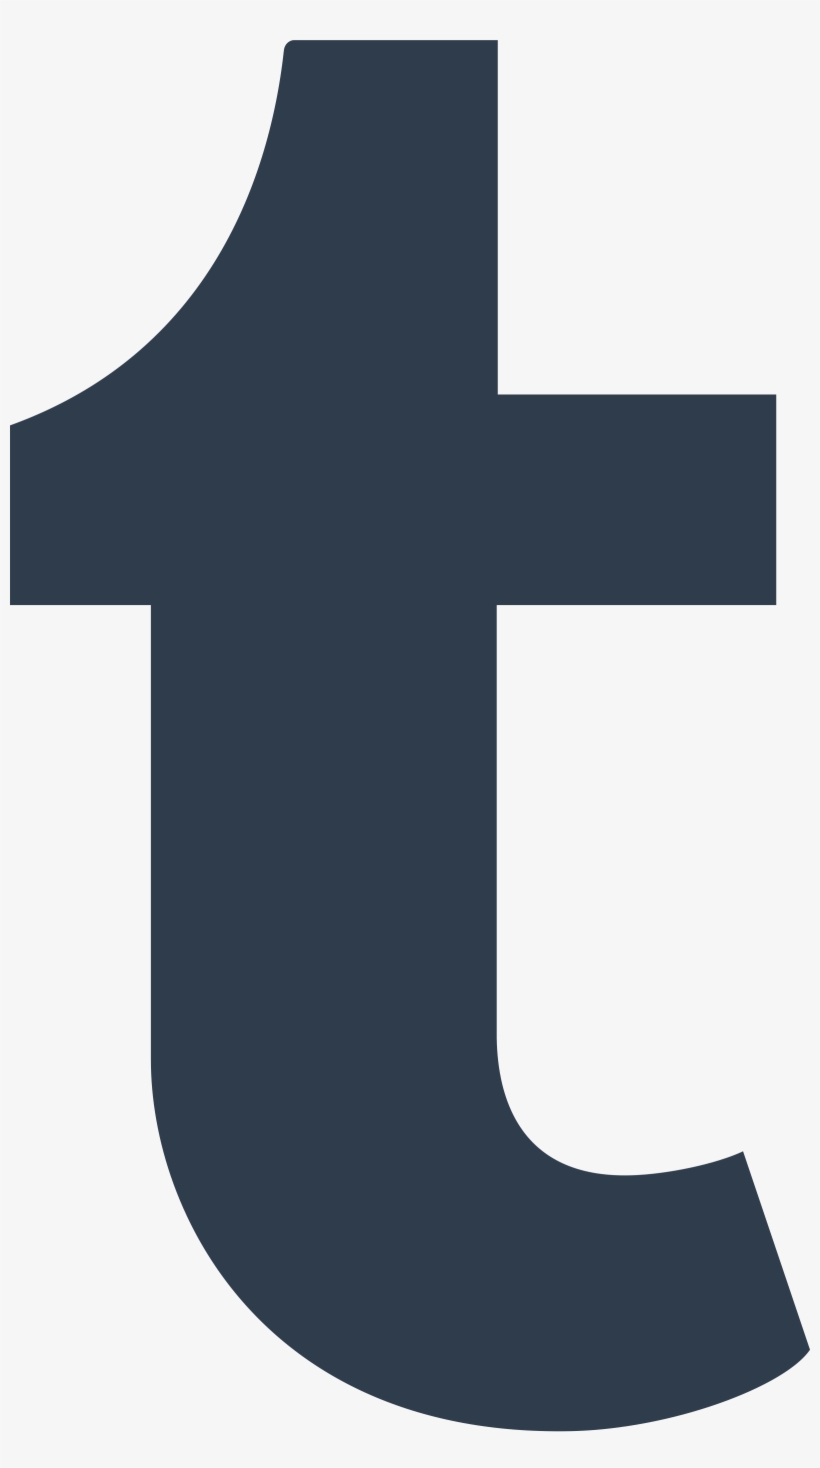 Tumblr Icon Logo Png Transparent - Transparent Tumblr Icon, transparent png #165338